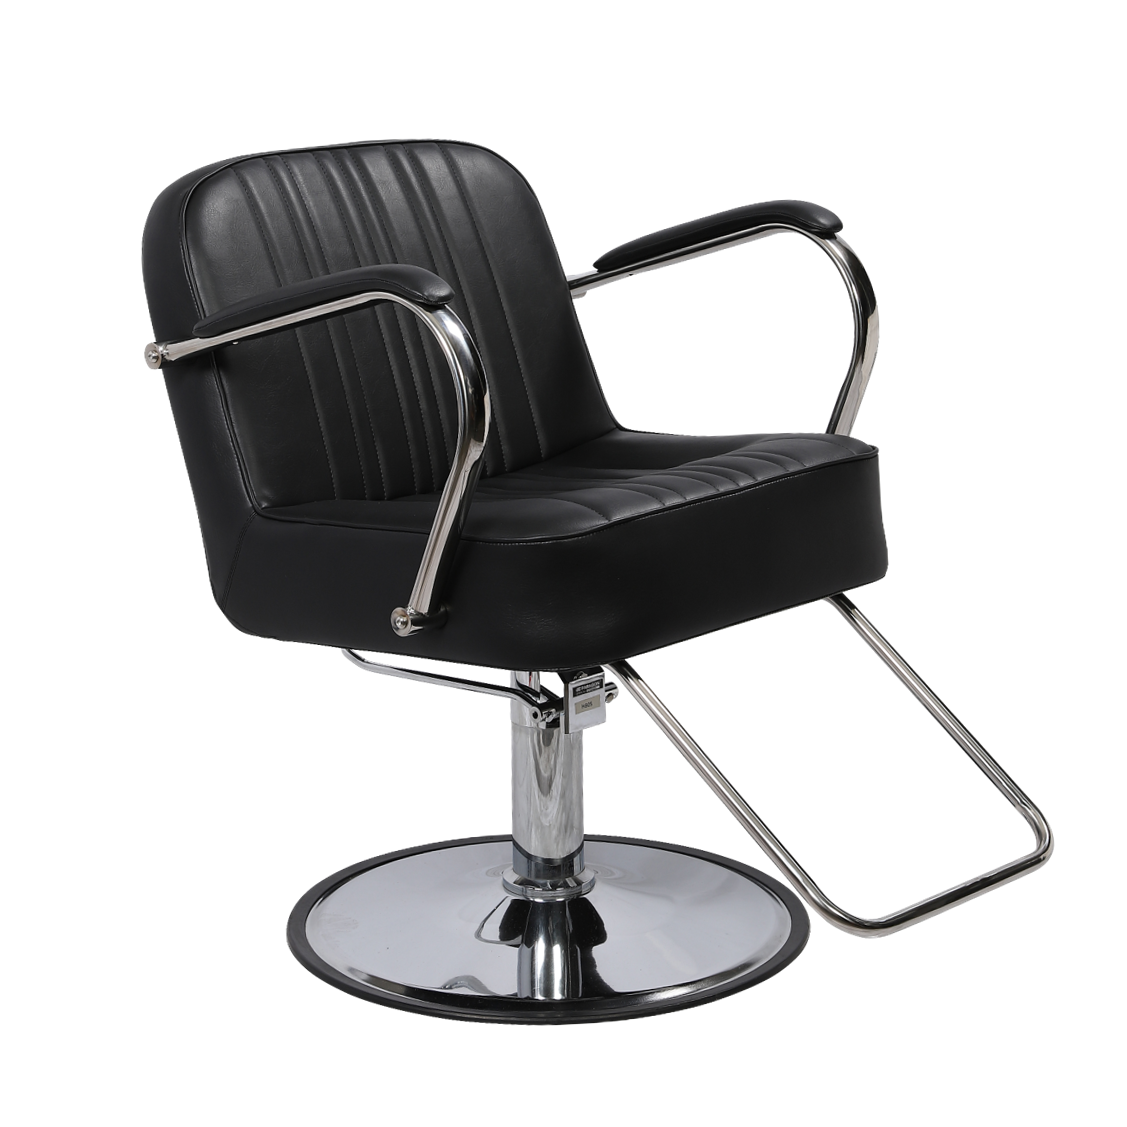 Rowan Salon Styling Chair - Garfield Commercial Enterprises Salon Equipment Spa Furniture Barber Chair Luxury